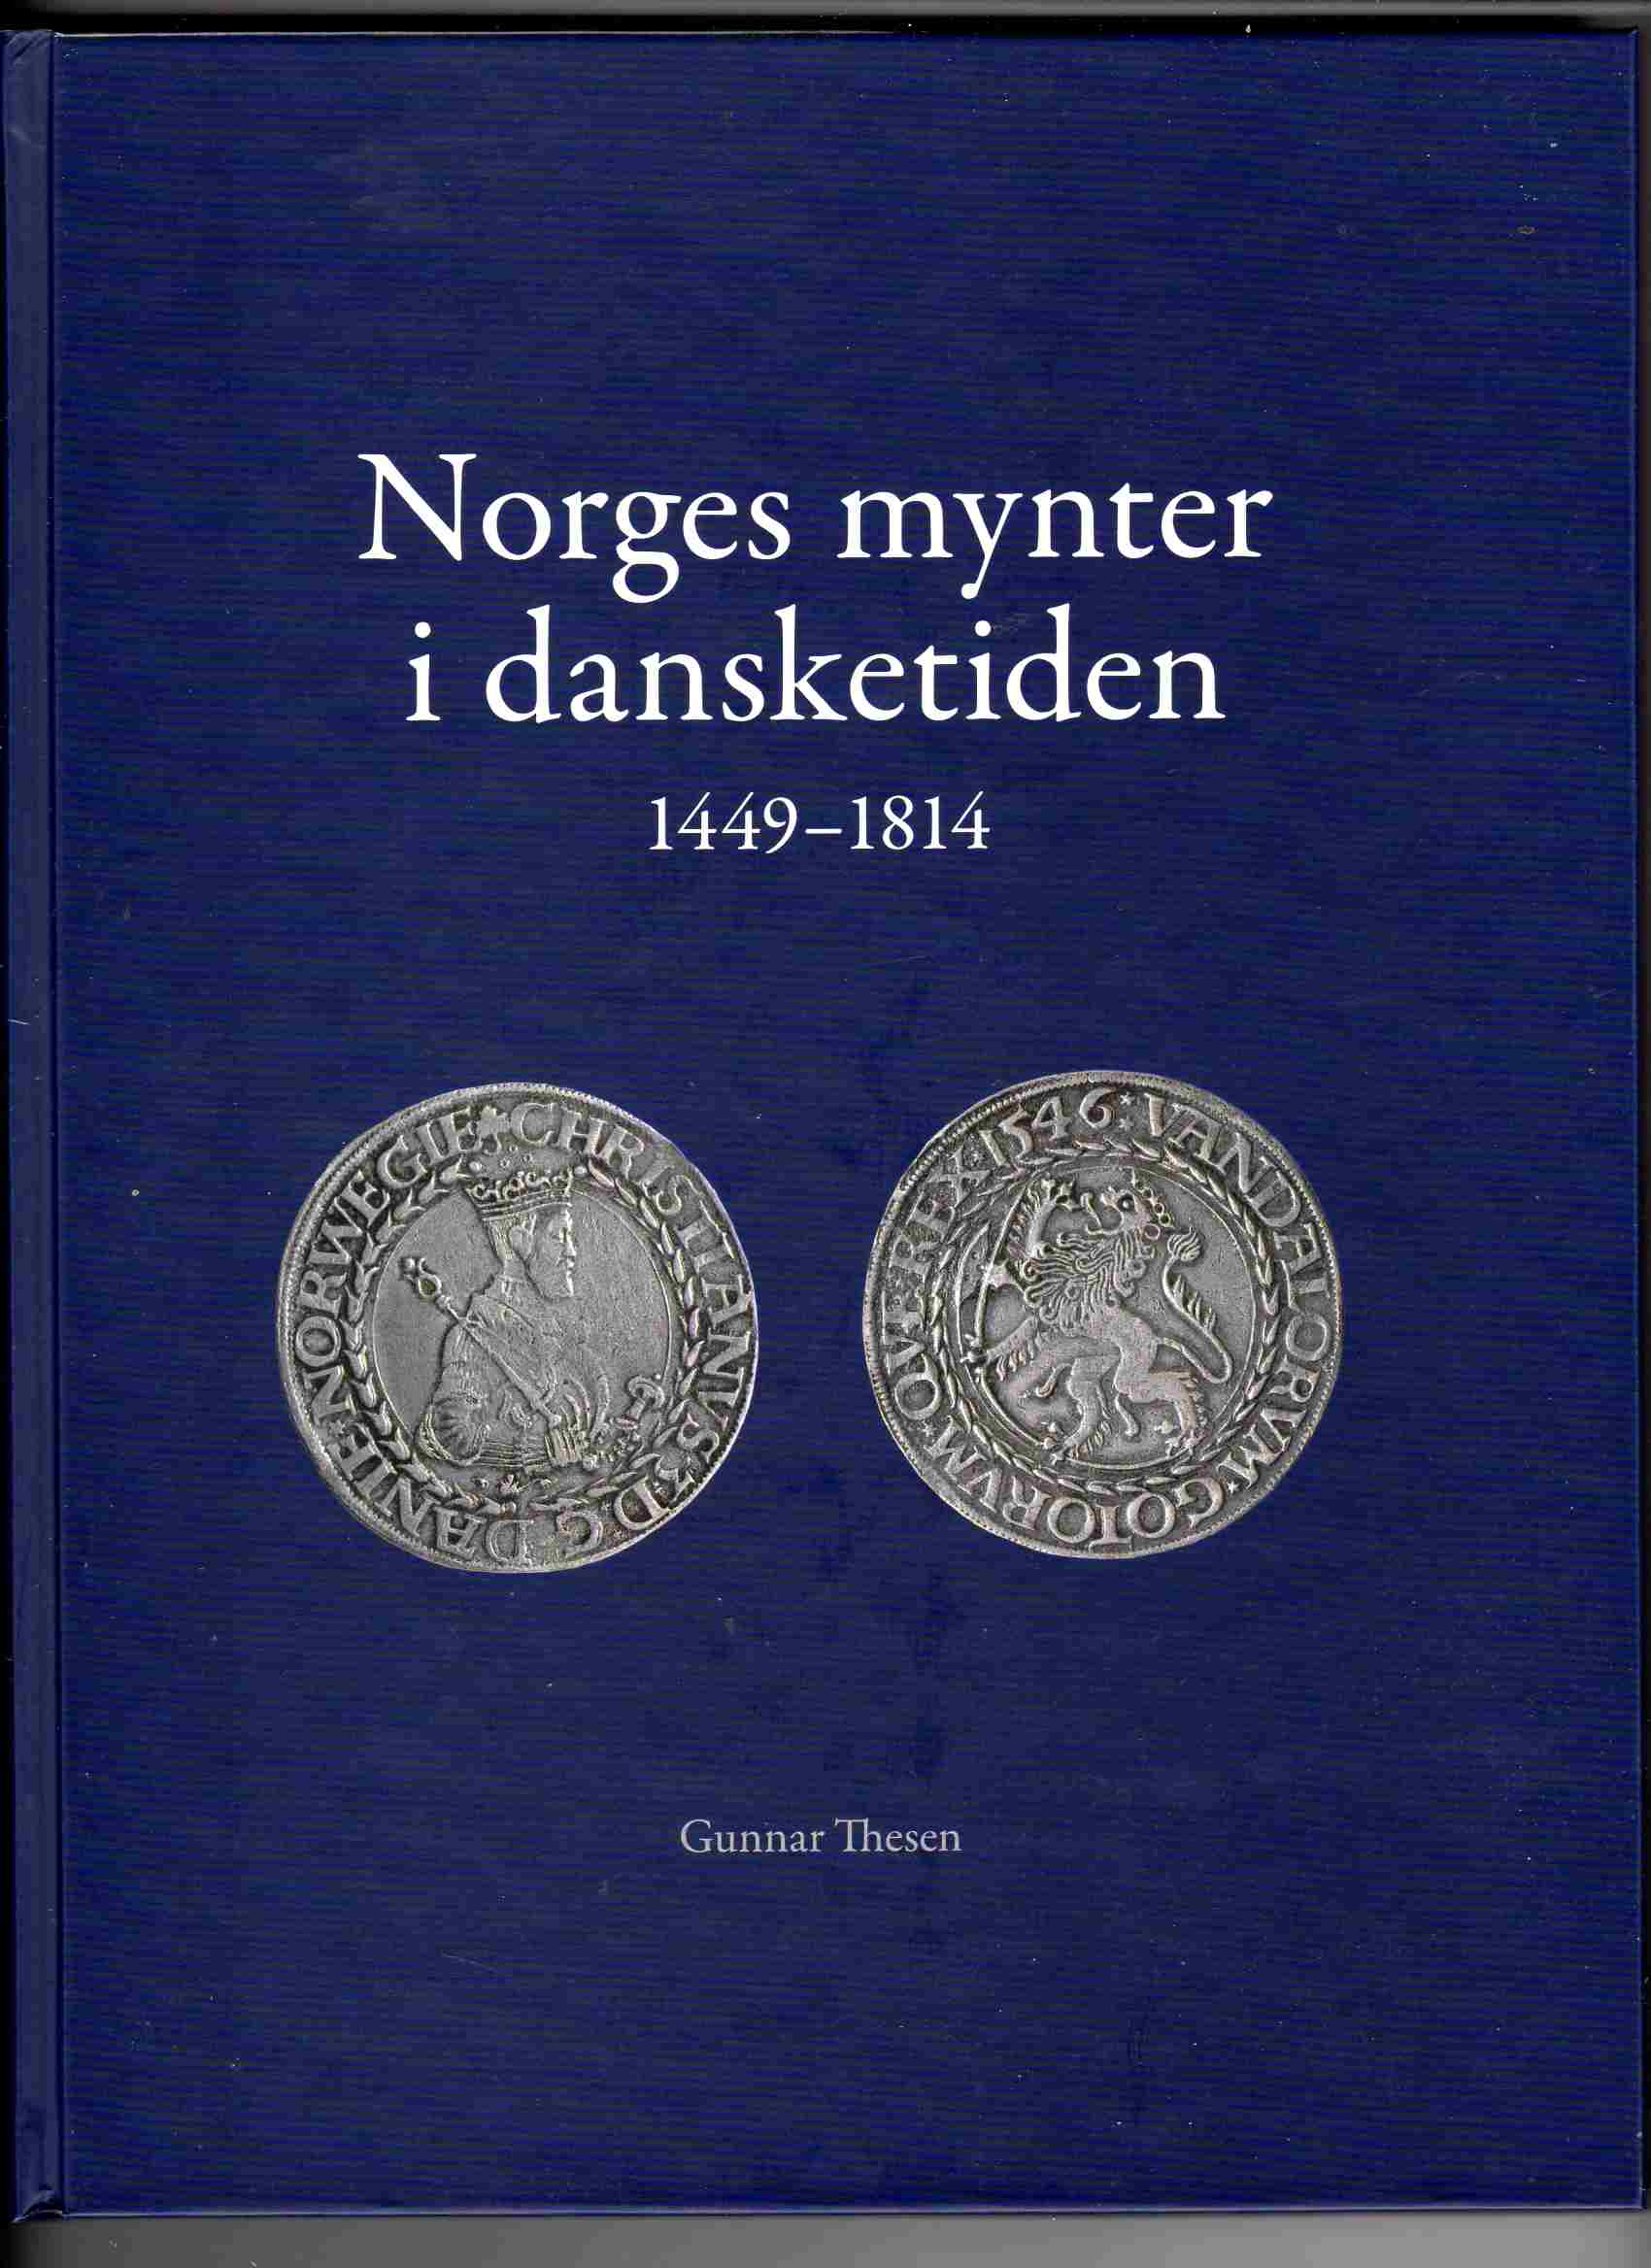 Norges mynter i dansketiden 1449-1814 Gunnar Thesen ded Oslo myntgalleri 2015 B Et par understrekninger